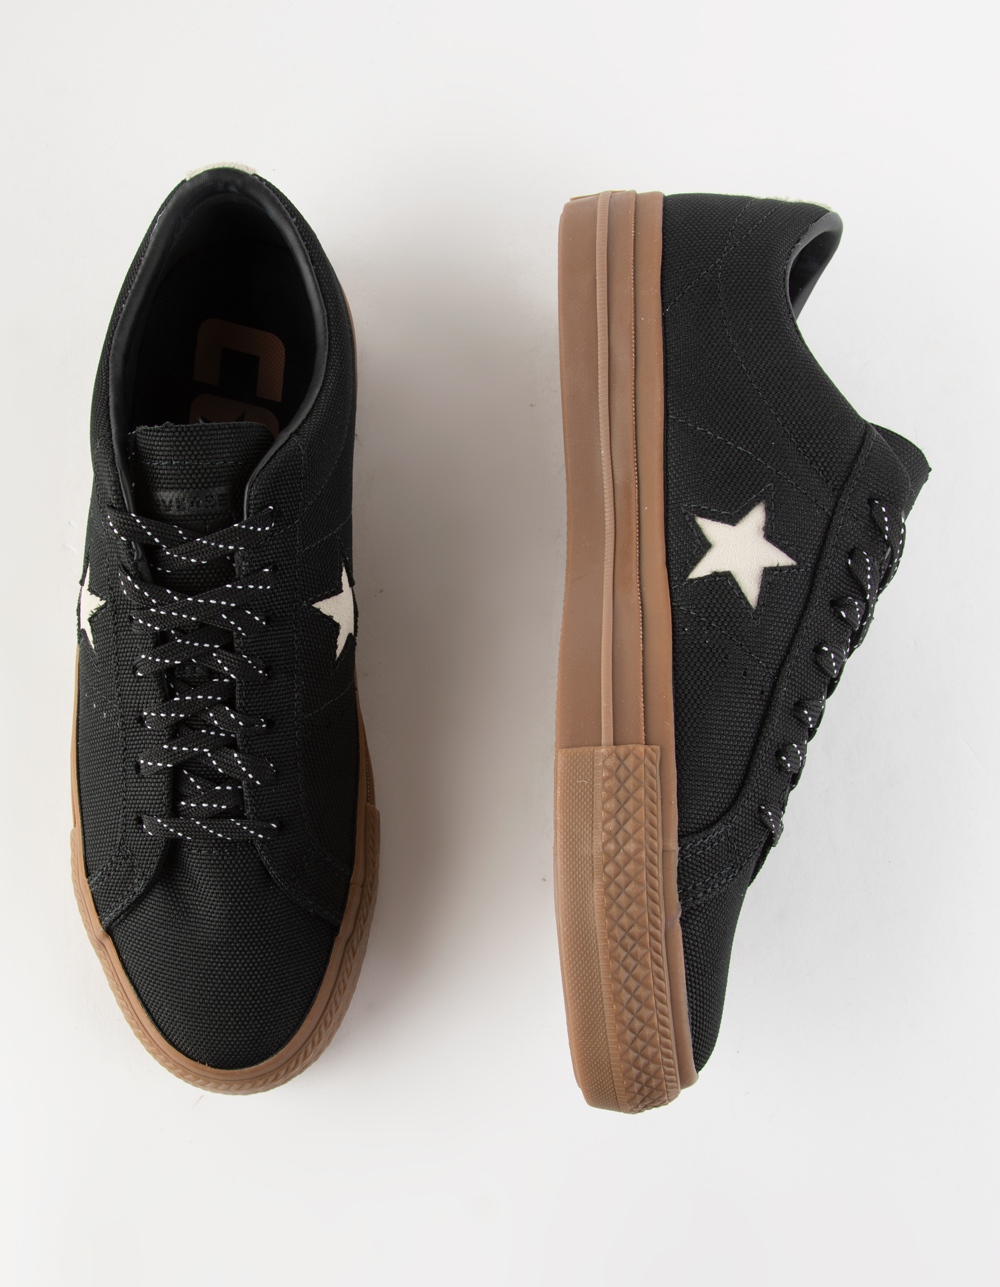 One Star Pro Cordura Canvas Shoes - BLACK | Tillys